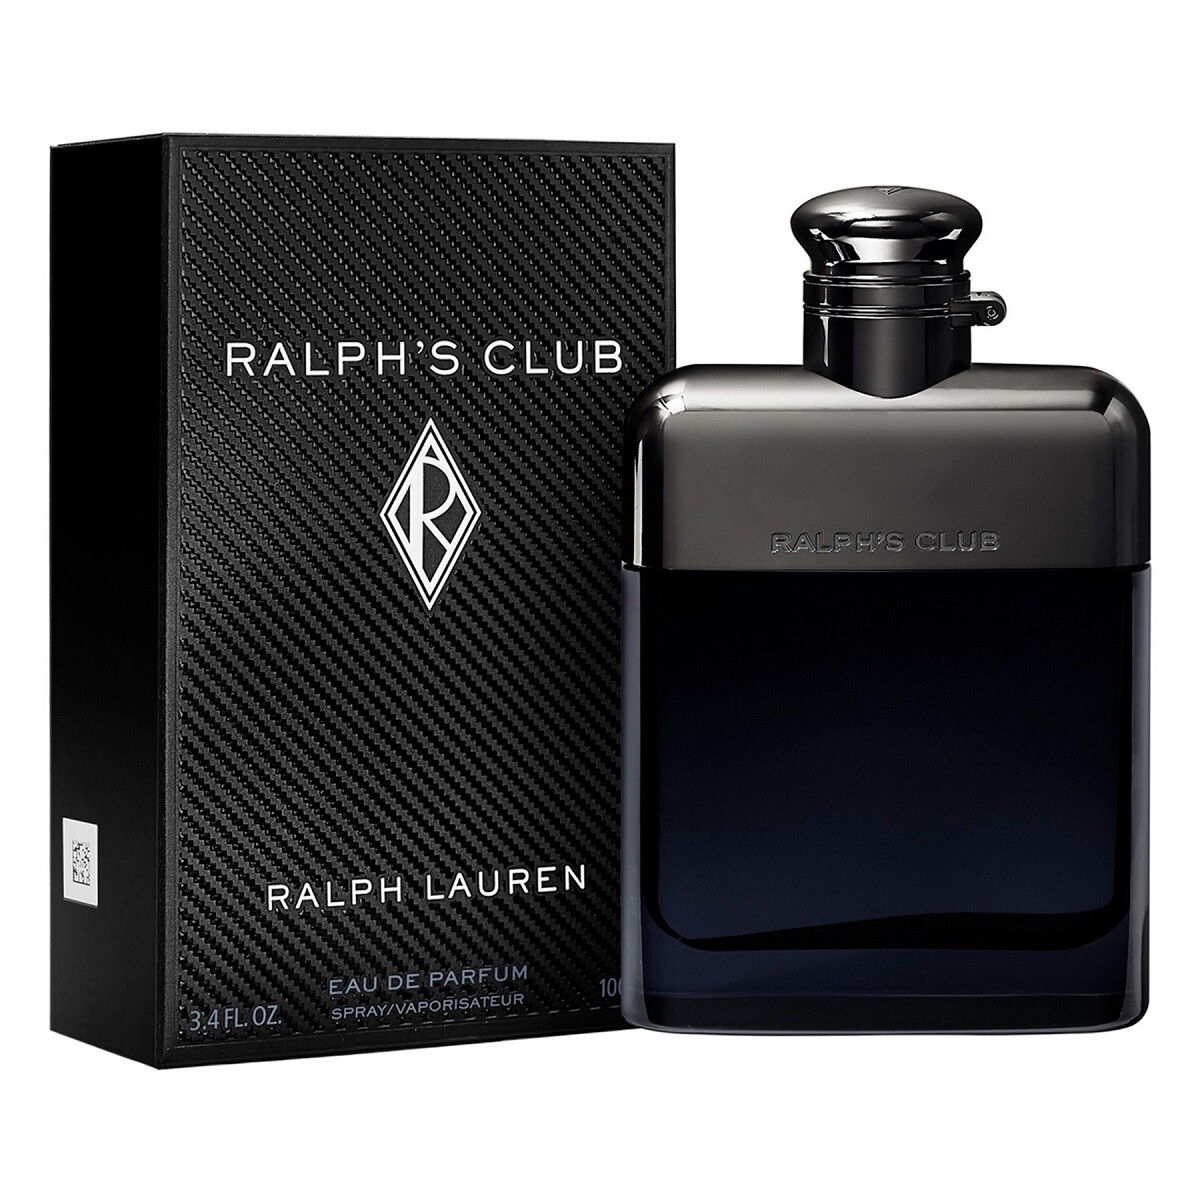 Perfume Ralph's Club Edp 100 Ml. 